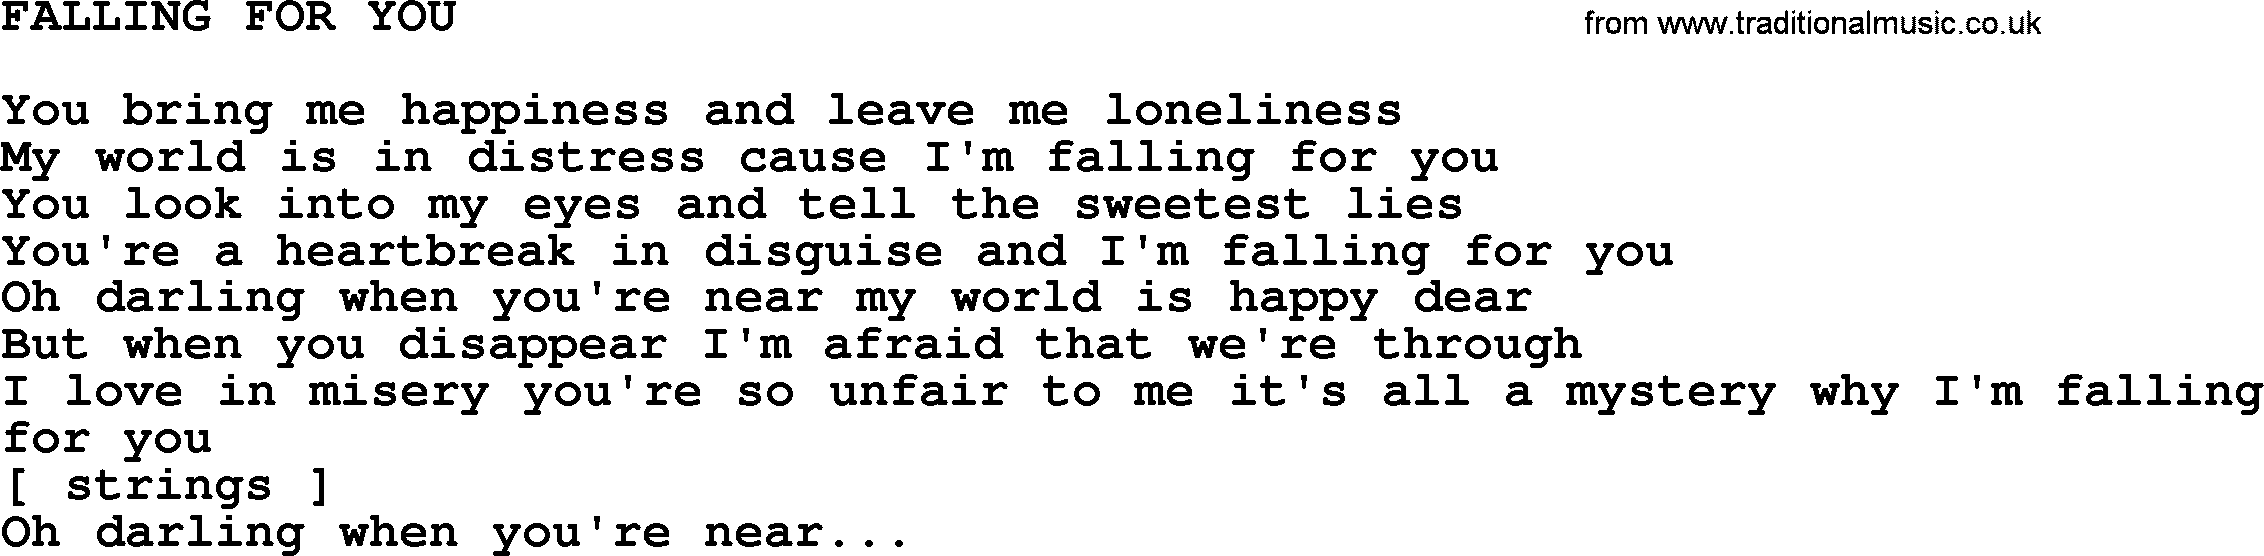 Merle Haggard song: Falling For You, lyrics.